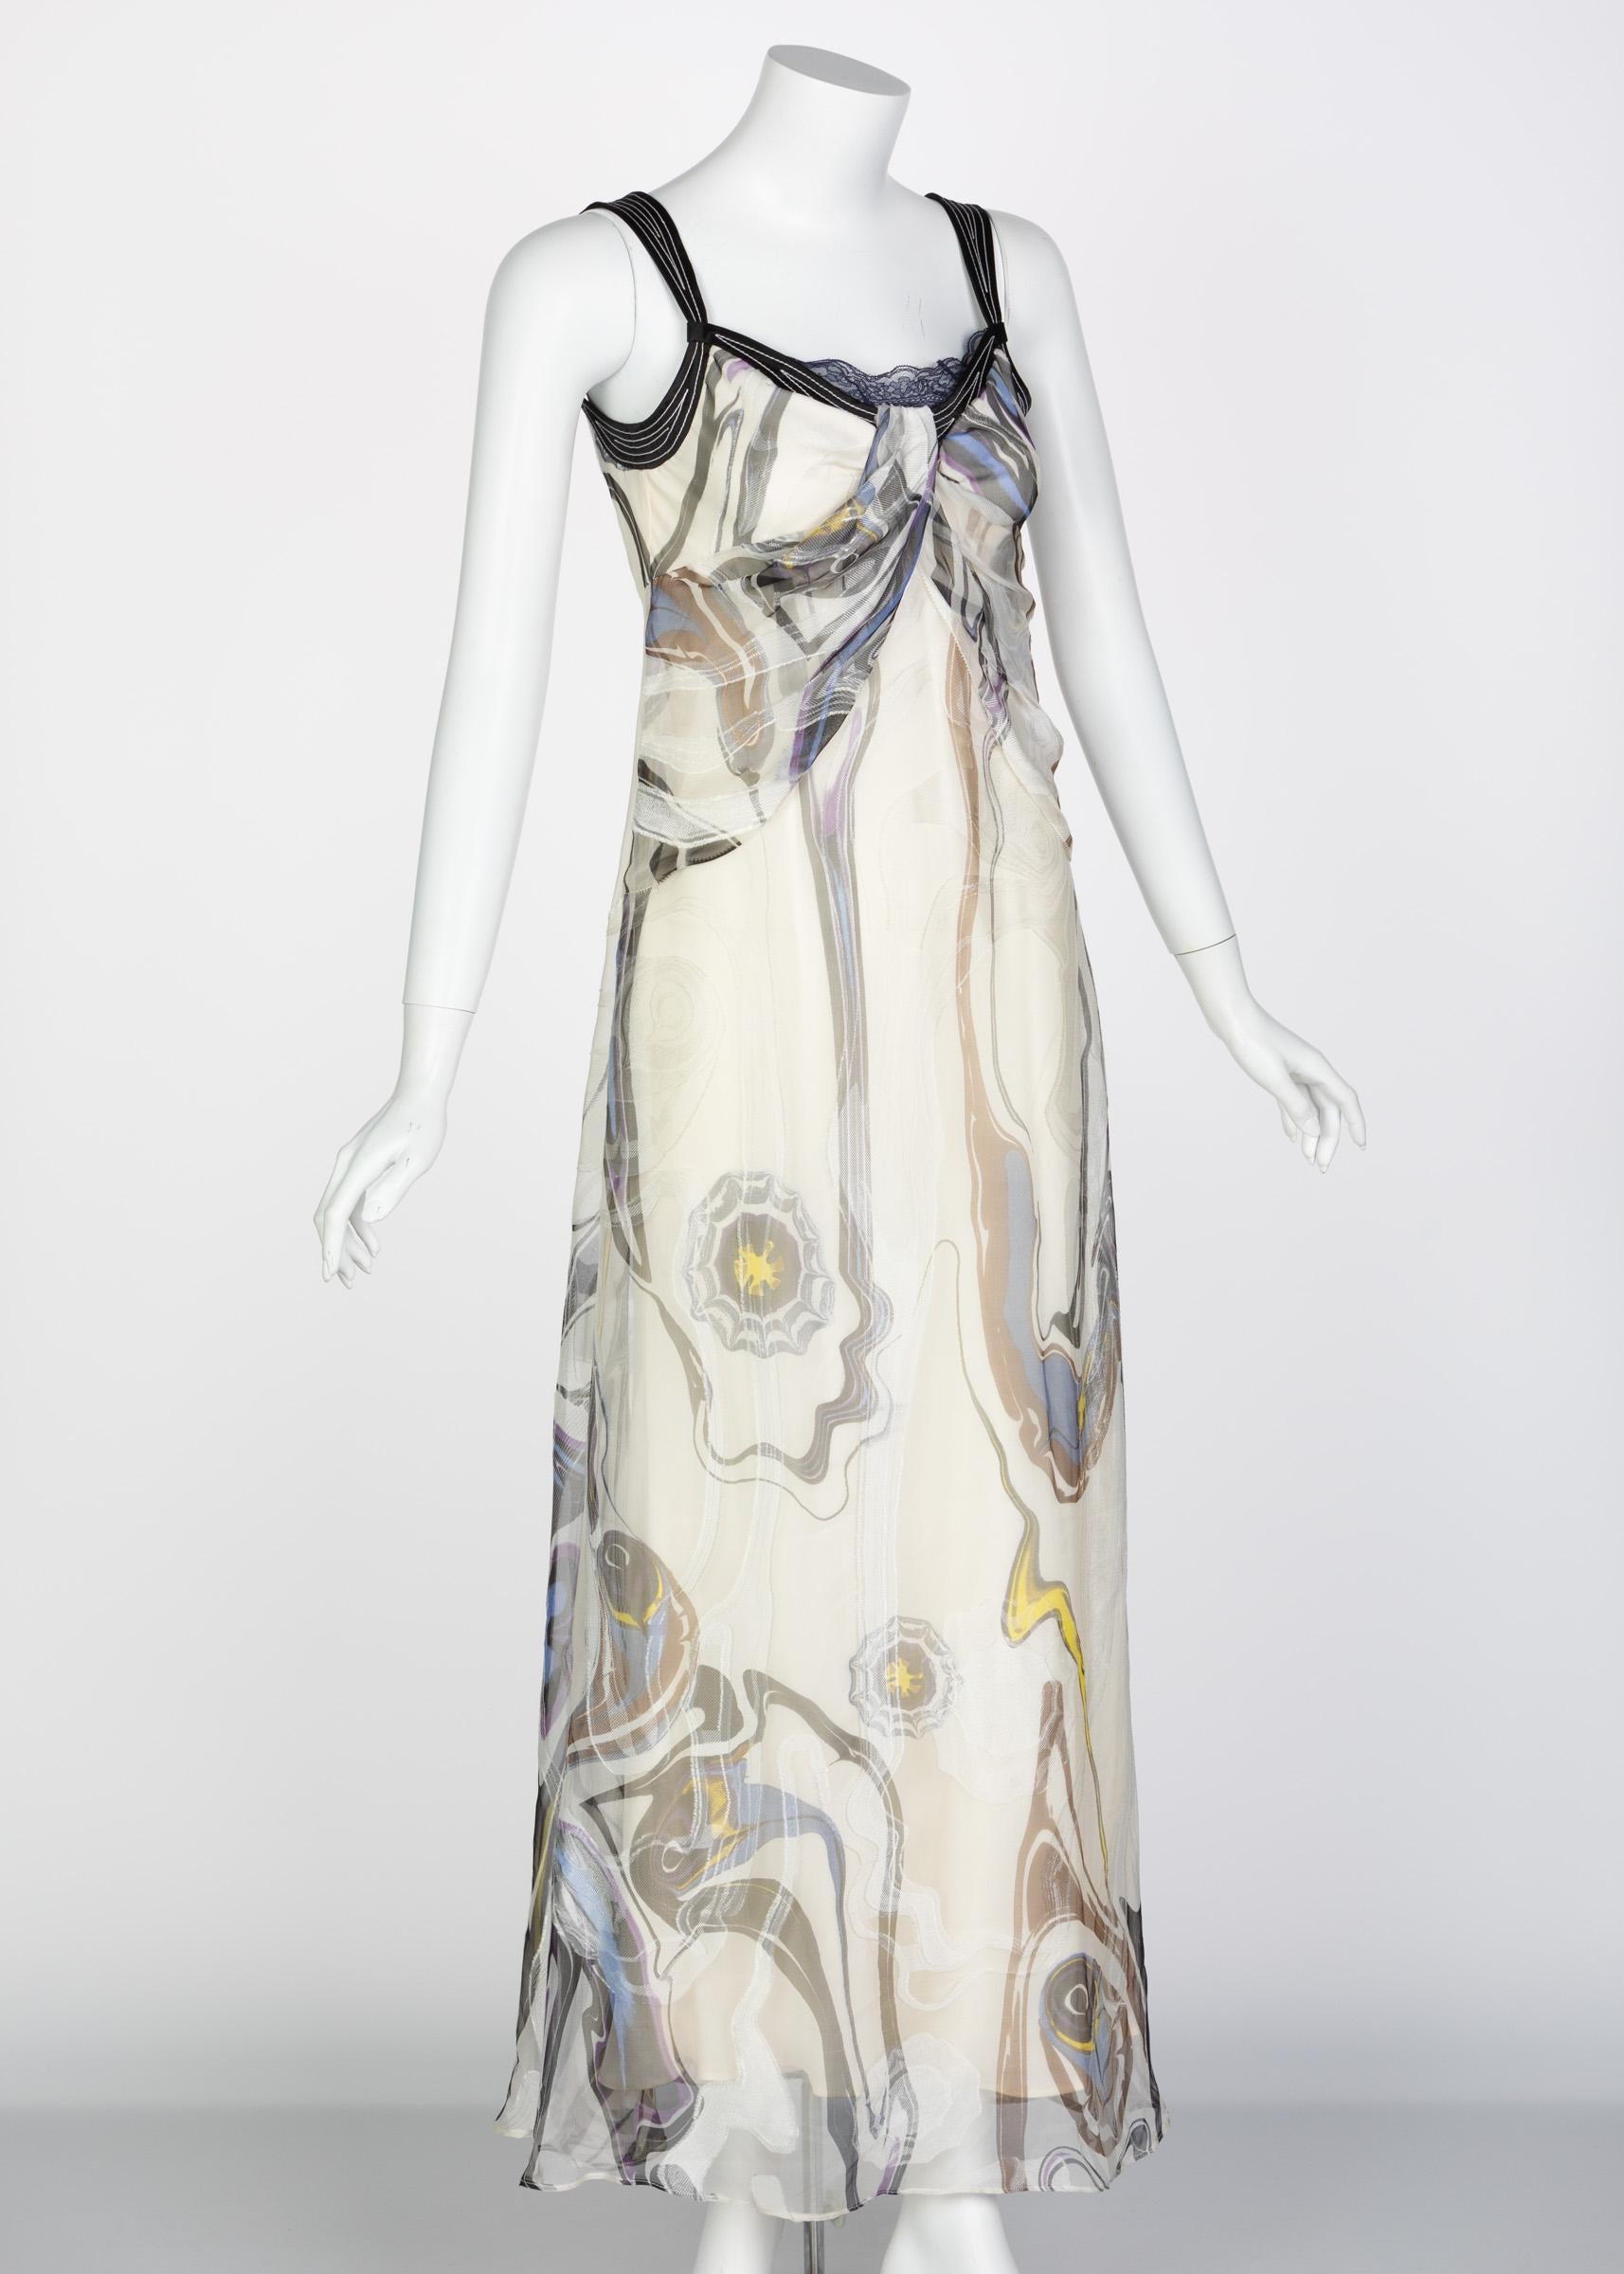 Nina Ricci Sleeveless Swirl Print Silk Maxi Dress  In Excellent Condition For Sale In Boca Raton, FL